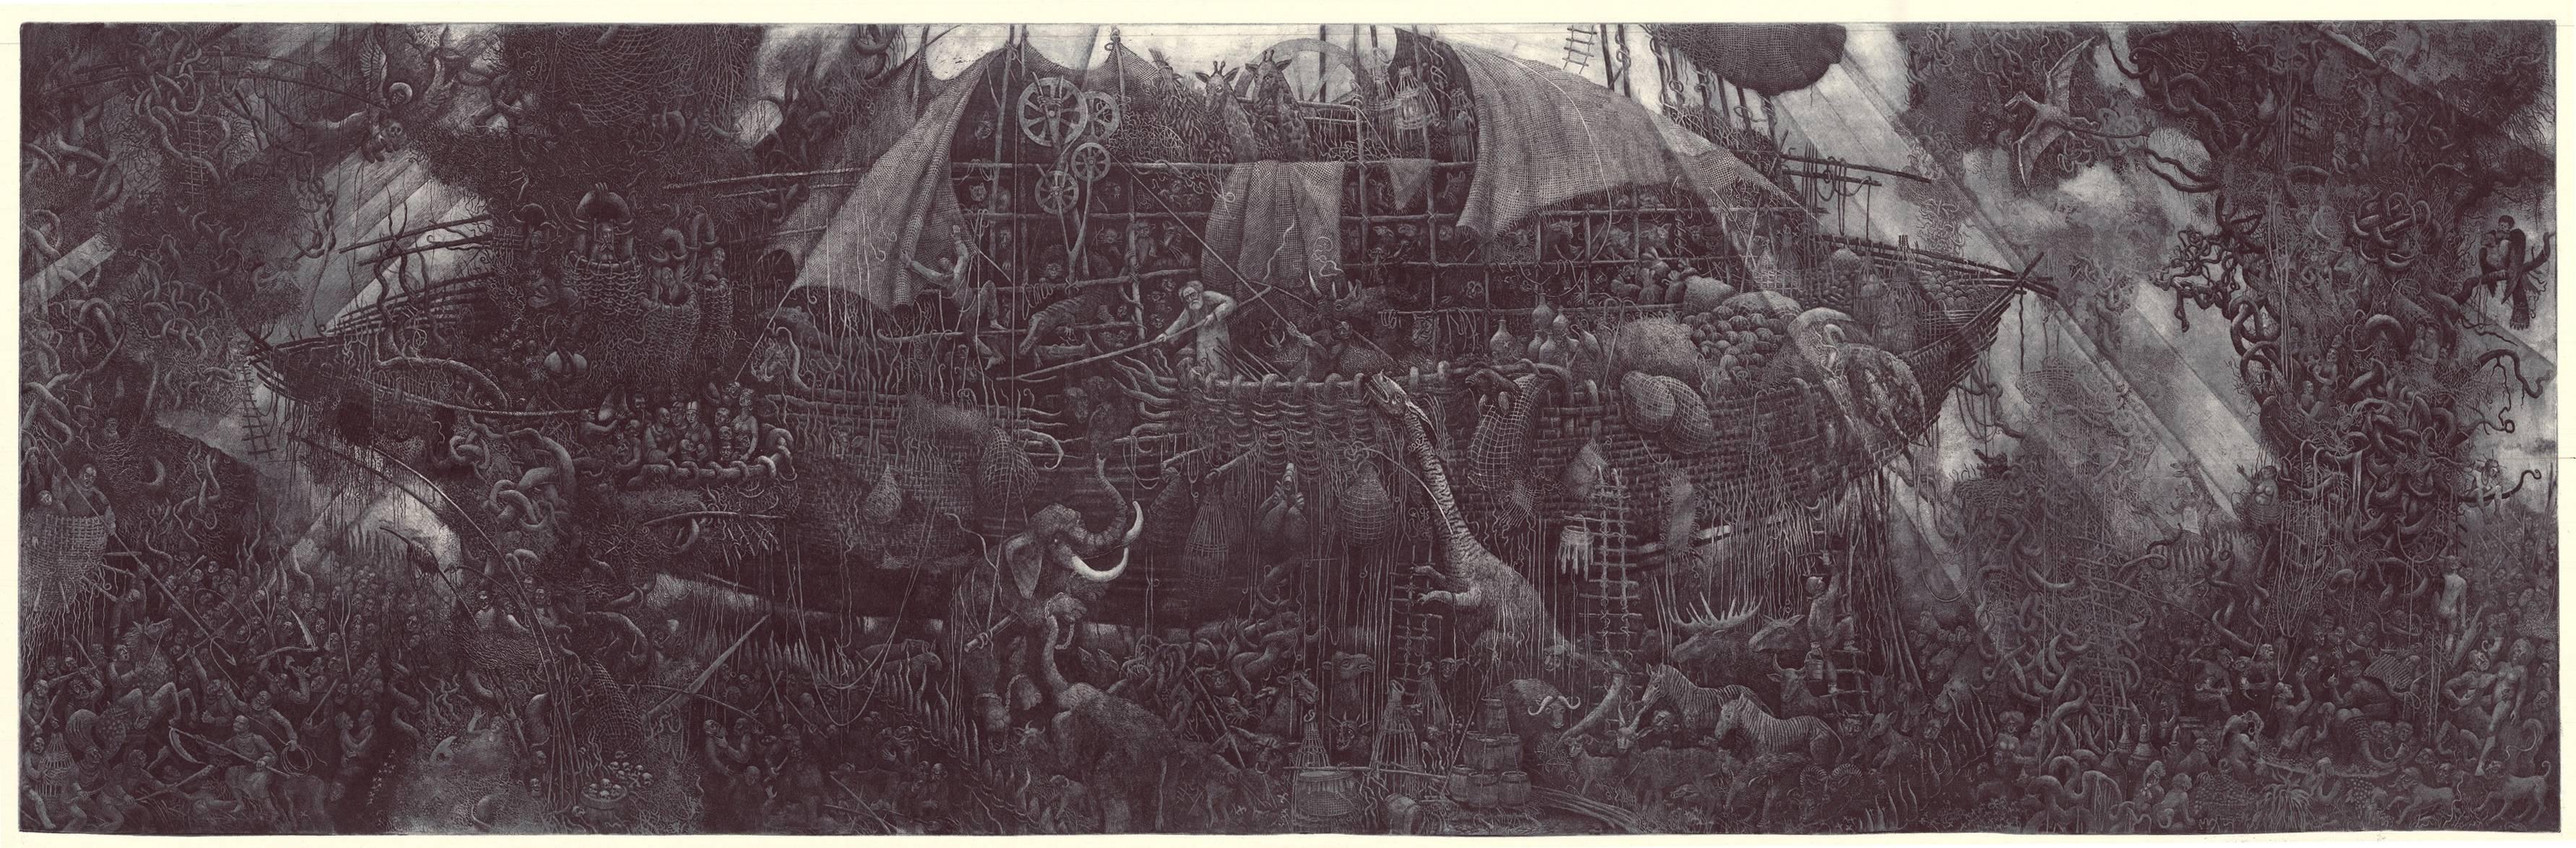 Parable of Noah I    - Print by Nikolay Nikolaevich Batakov